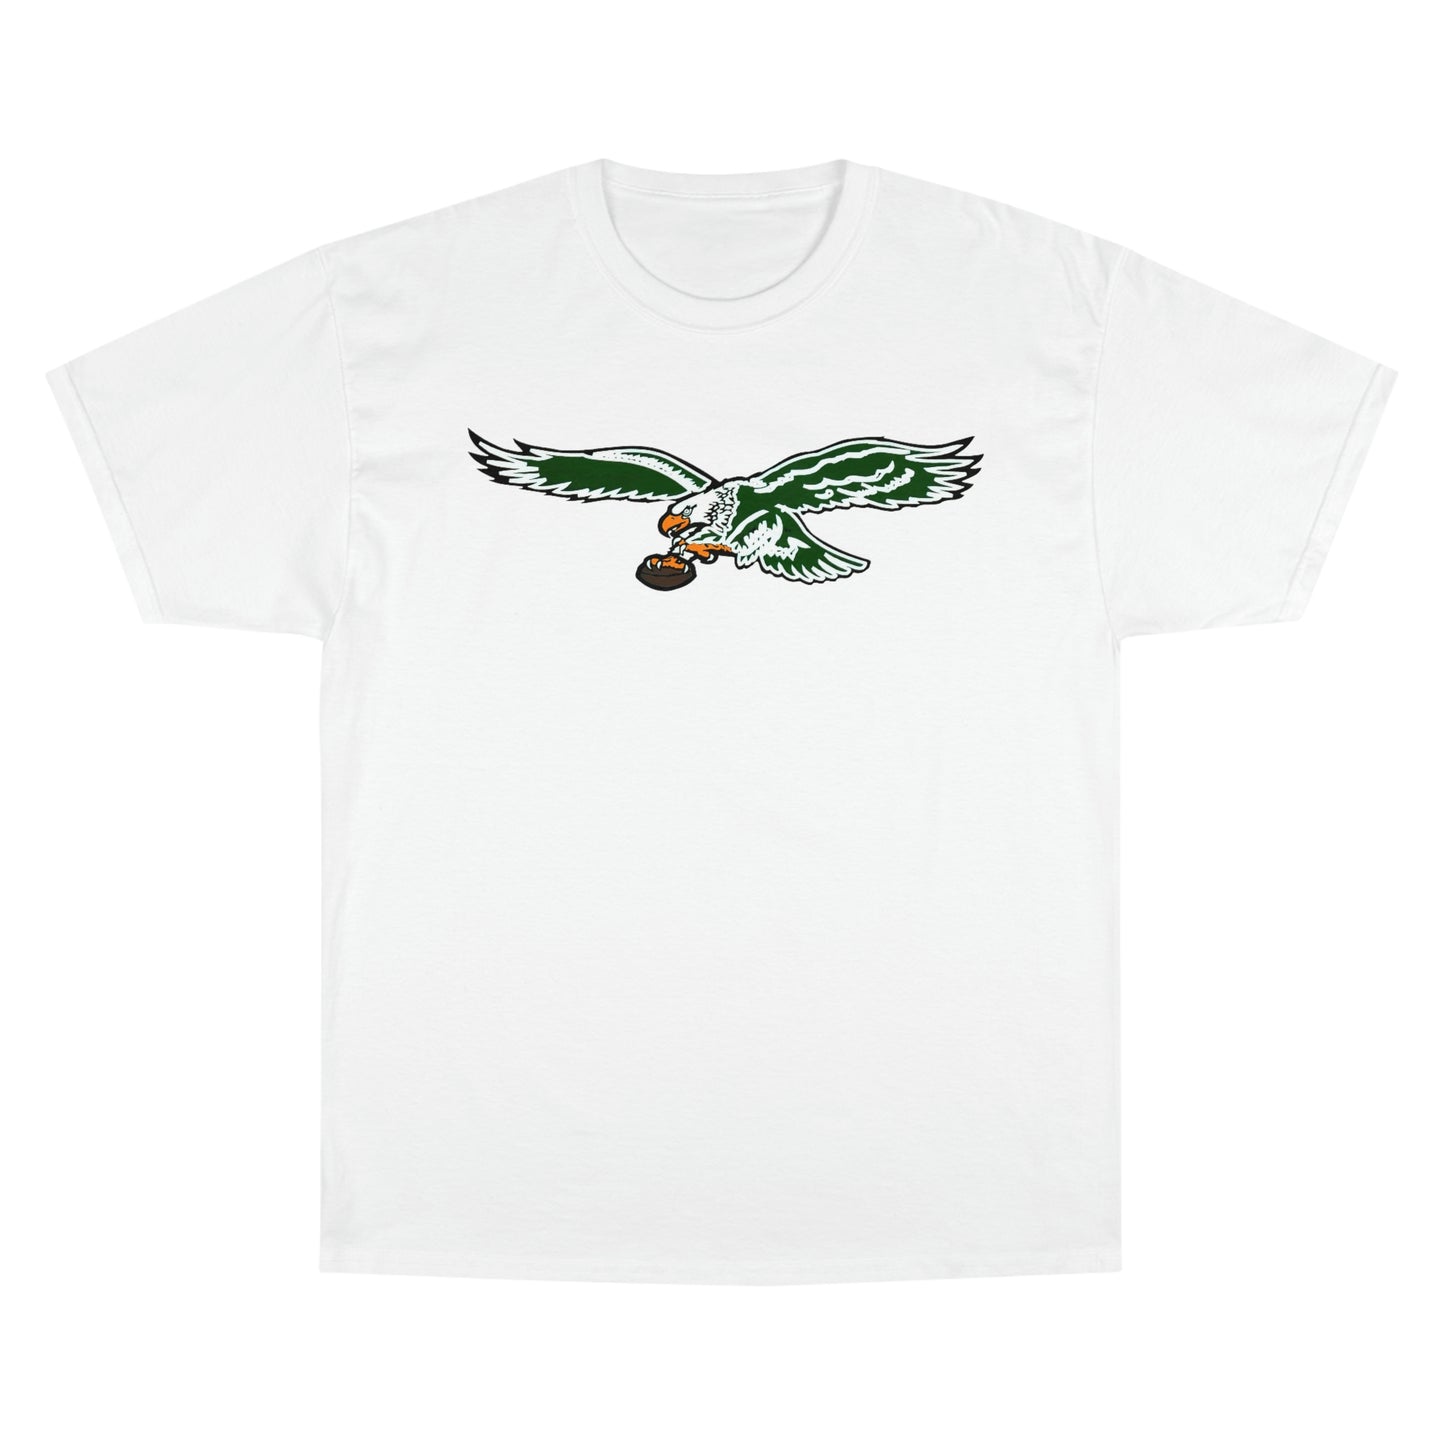 Philadelphia Eagles Champion T-Shirt